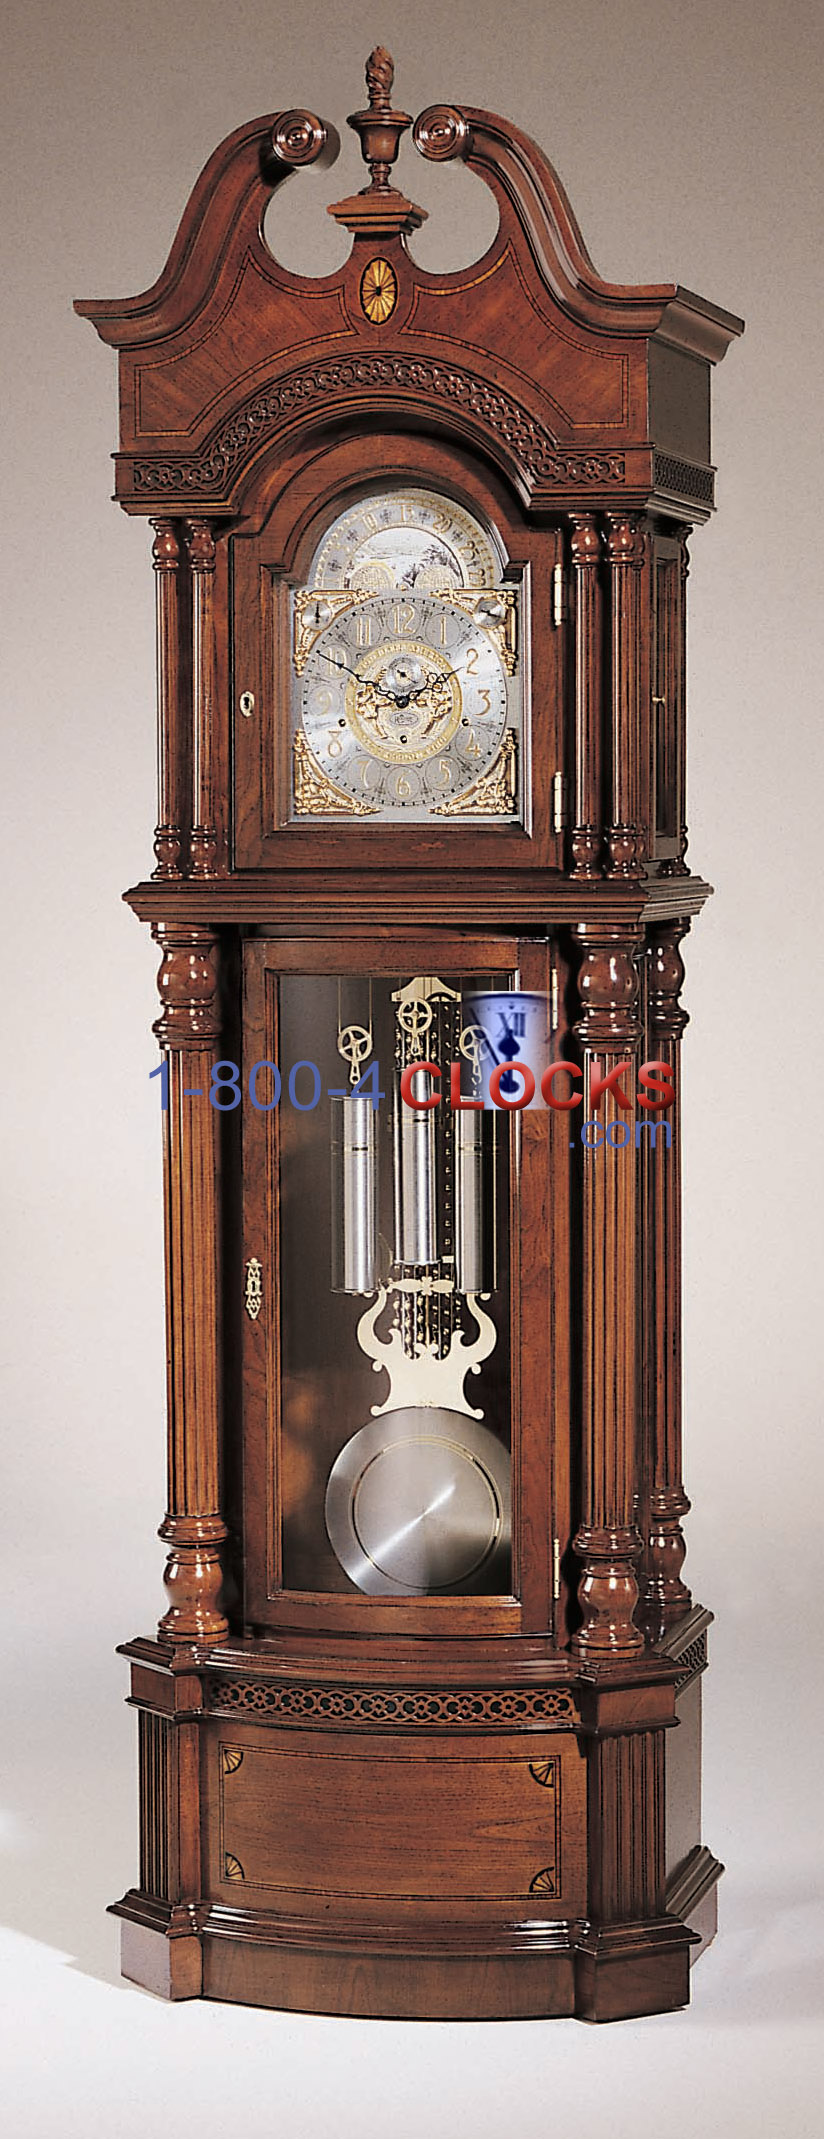 Ridgeway Independence Grandfather Clock At 1 800